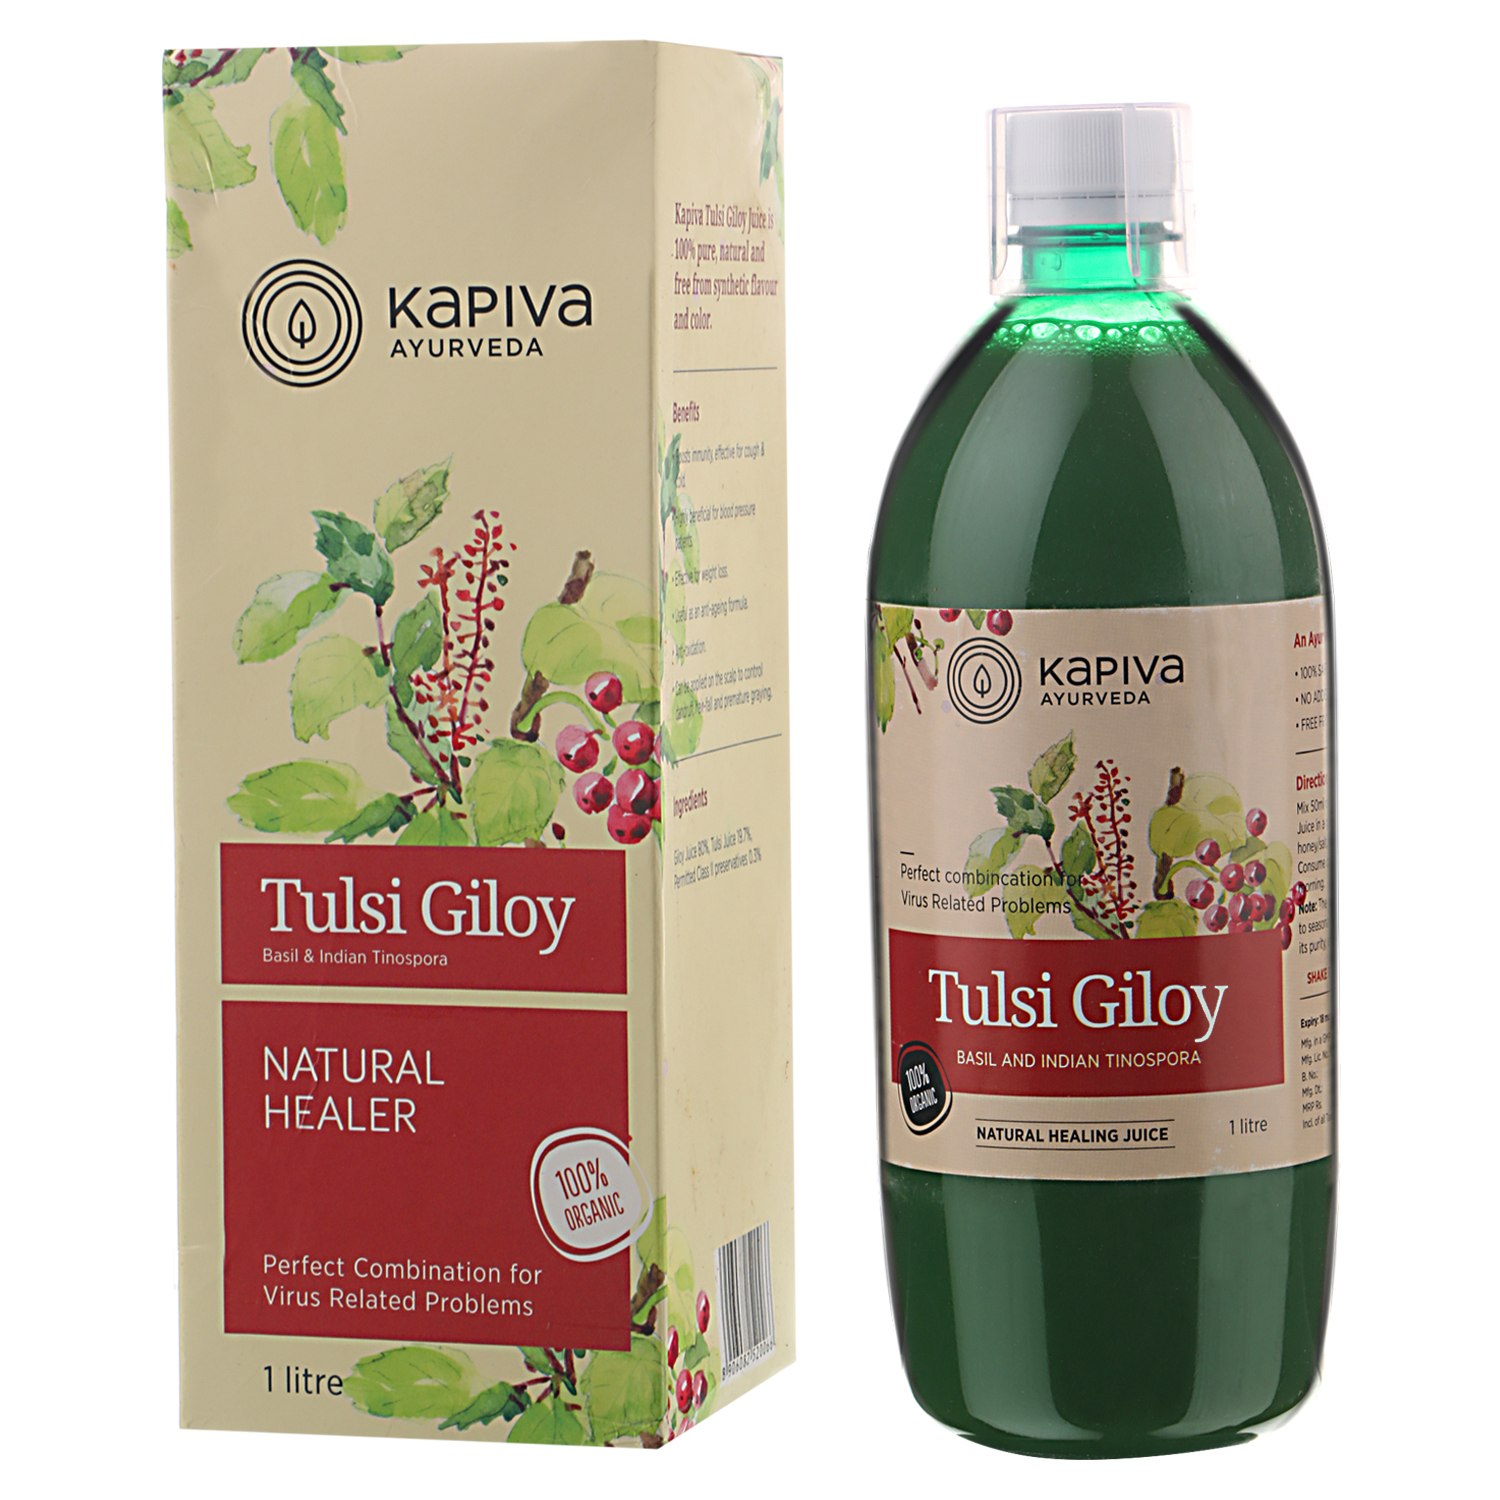 Buy Kapiva Tulsi Giloy Juice at Best Price Online